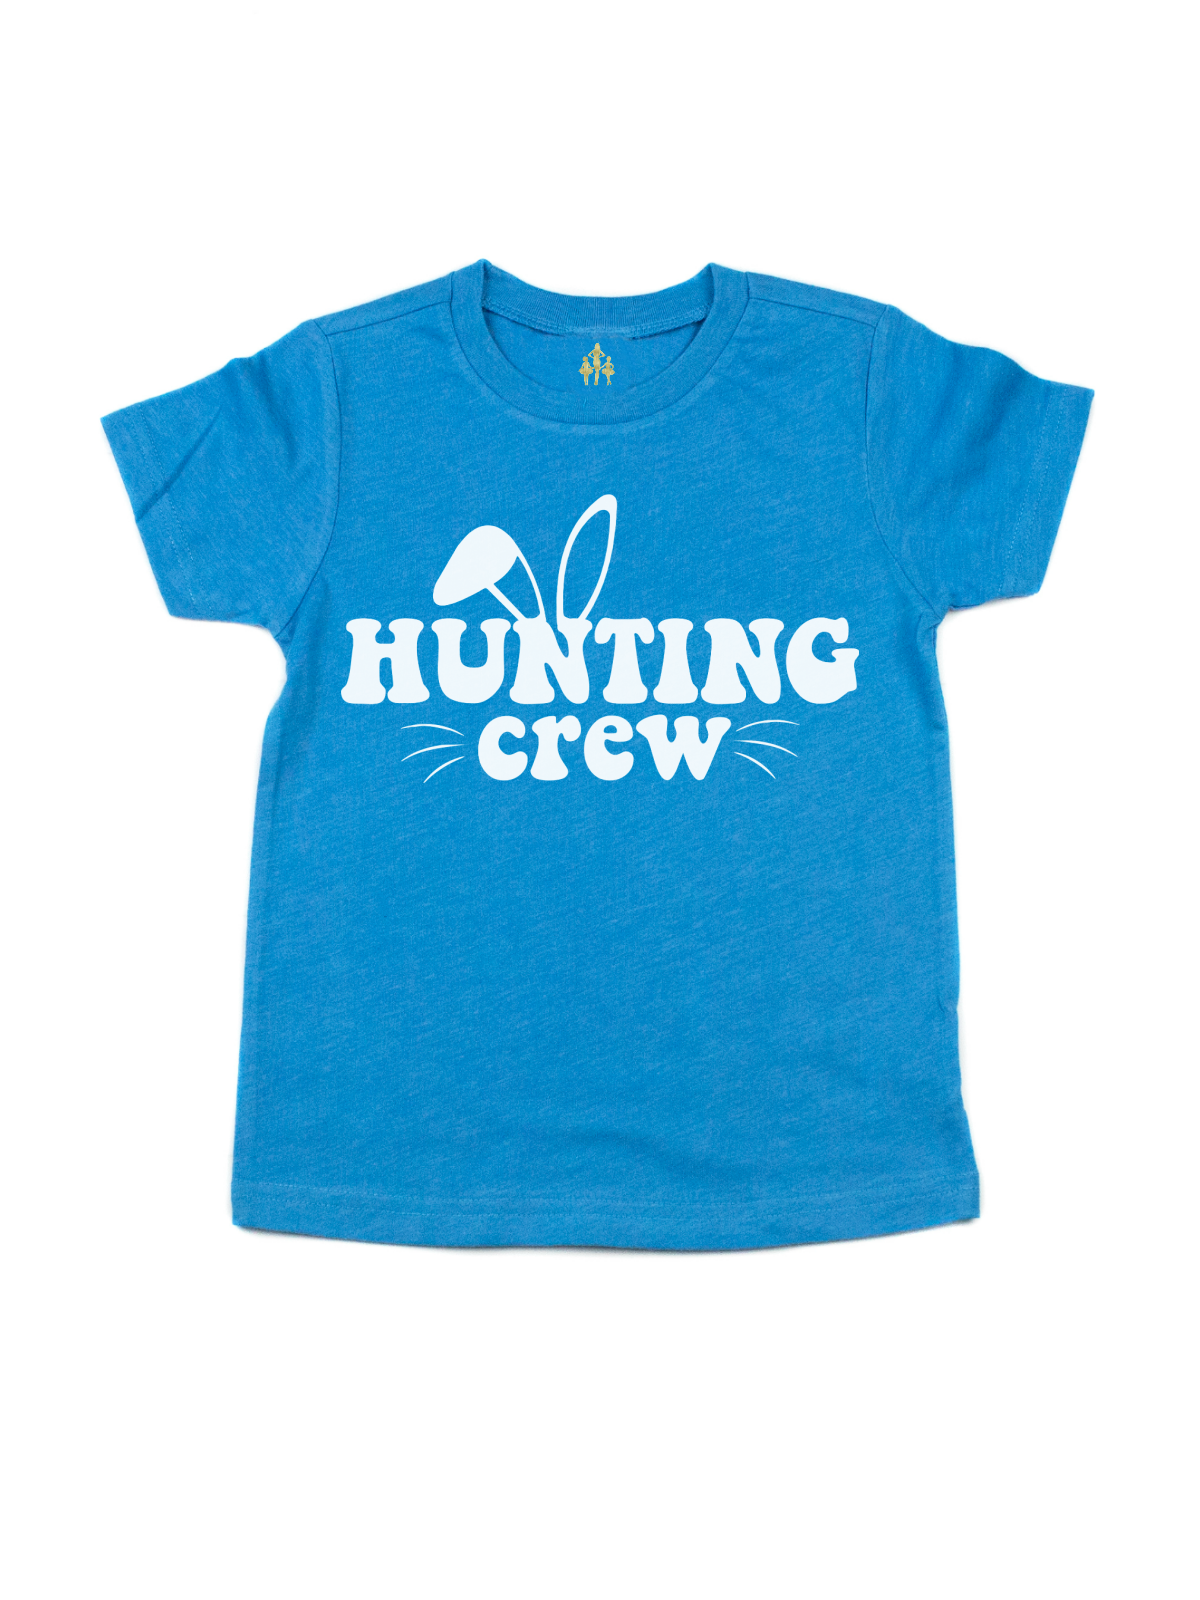 Hunting Crew Kids Shirt in Blue